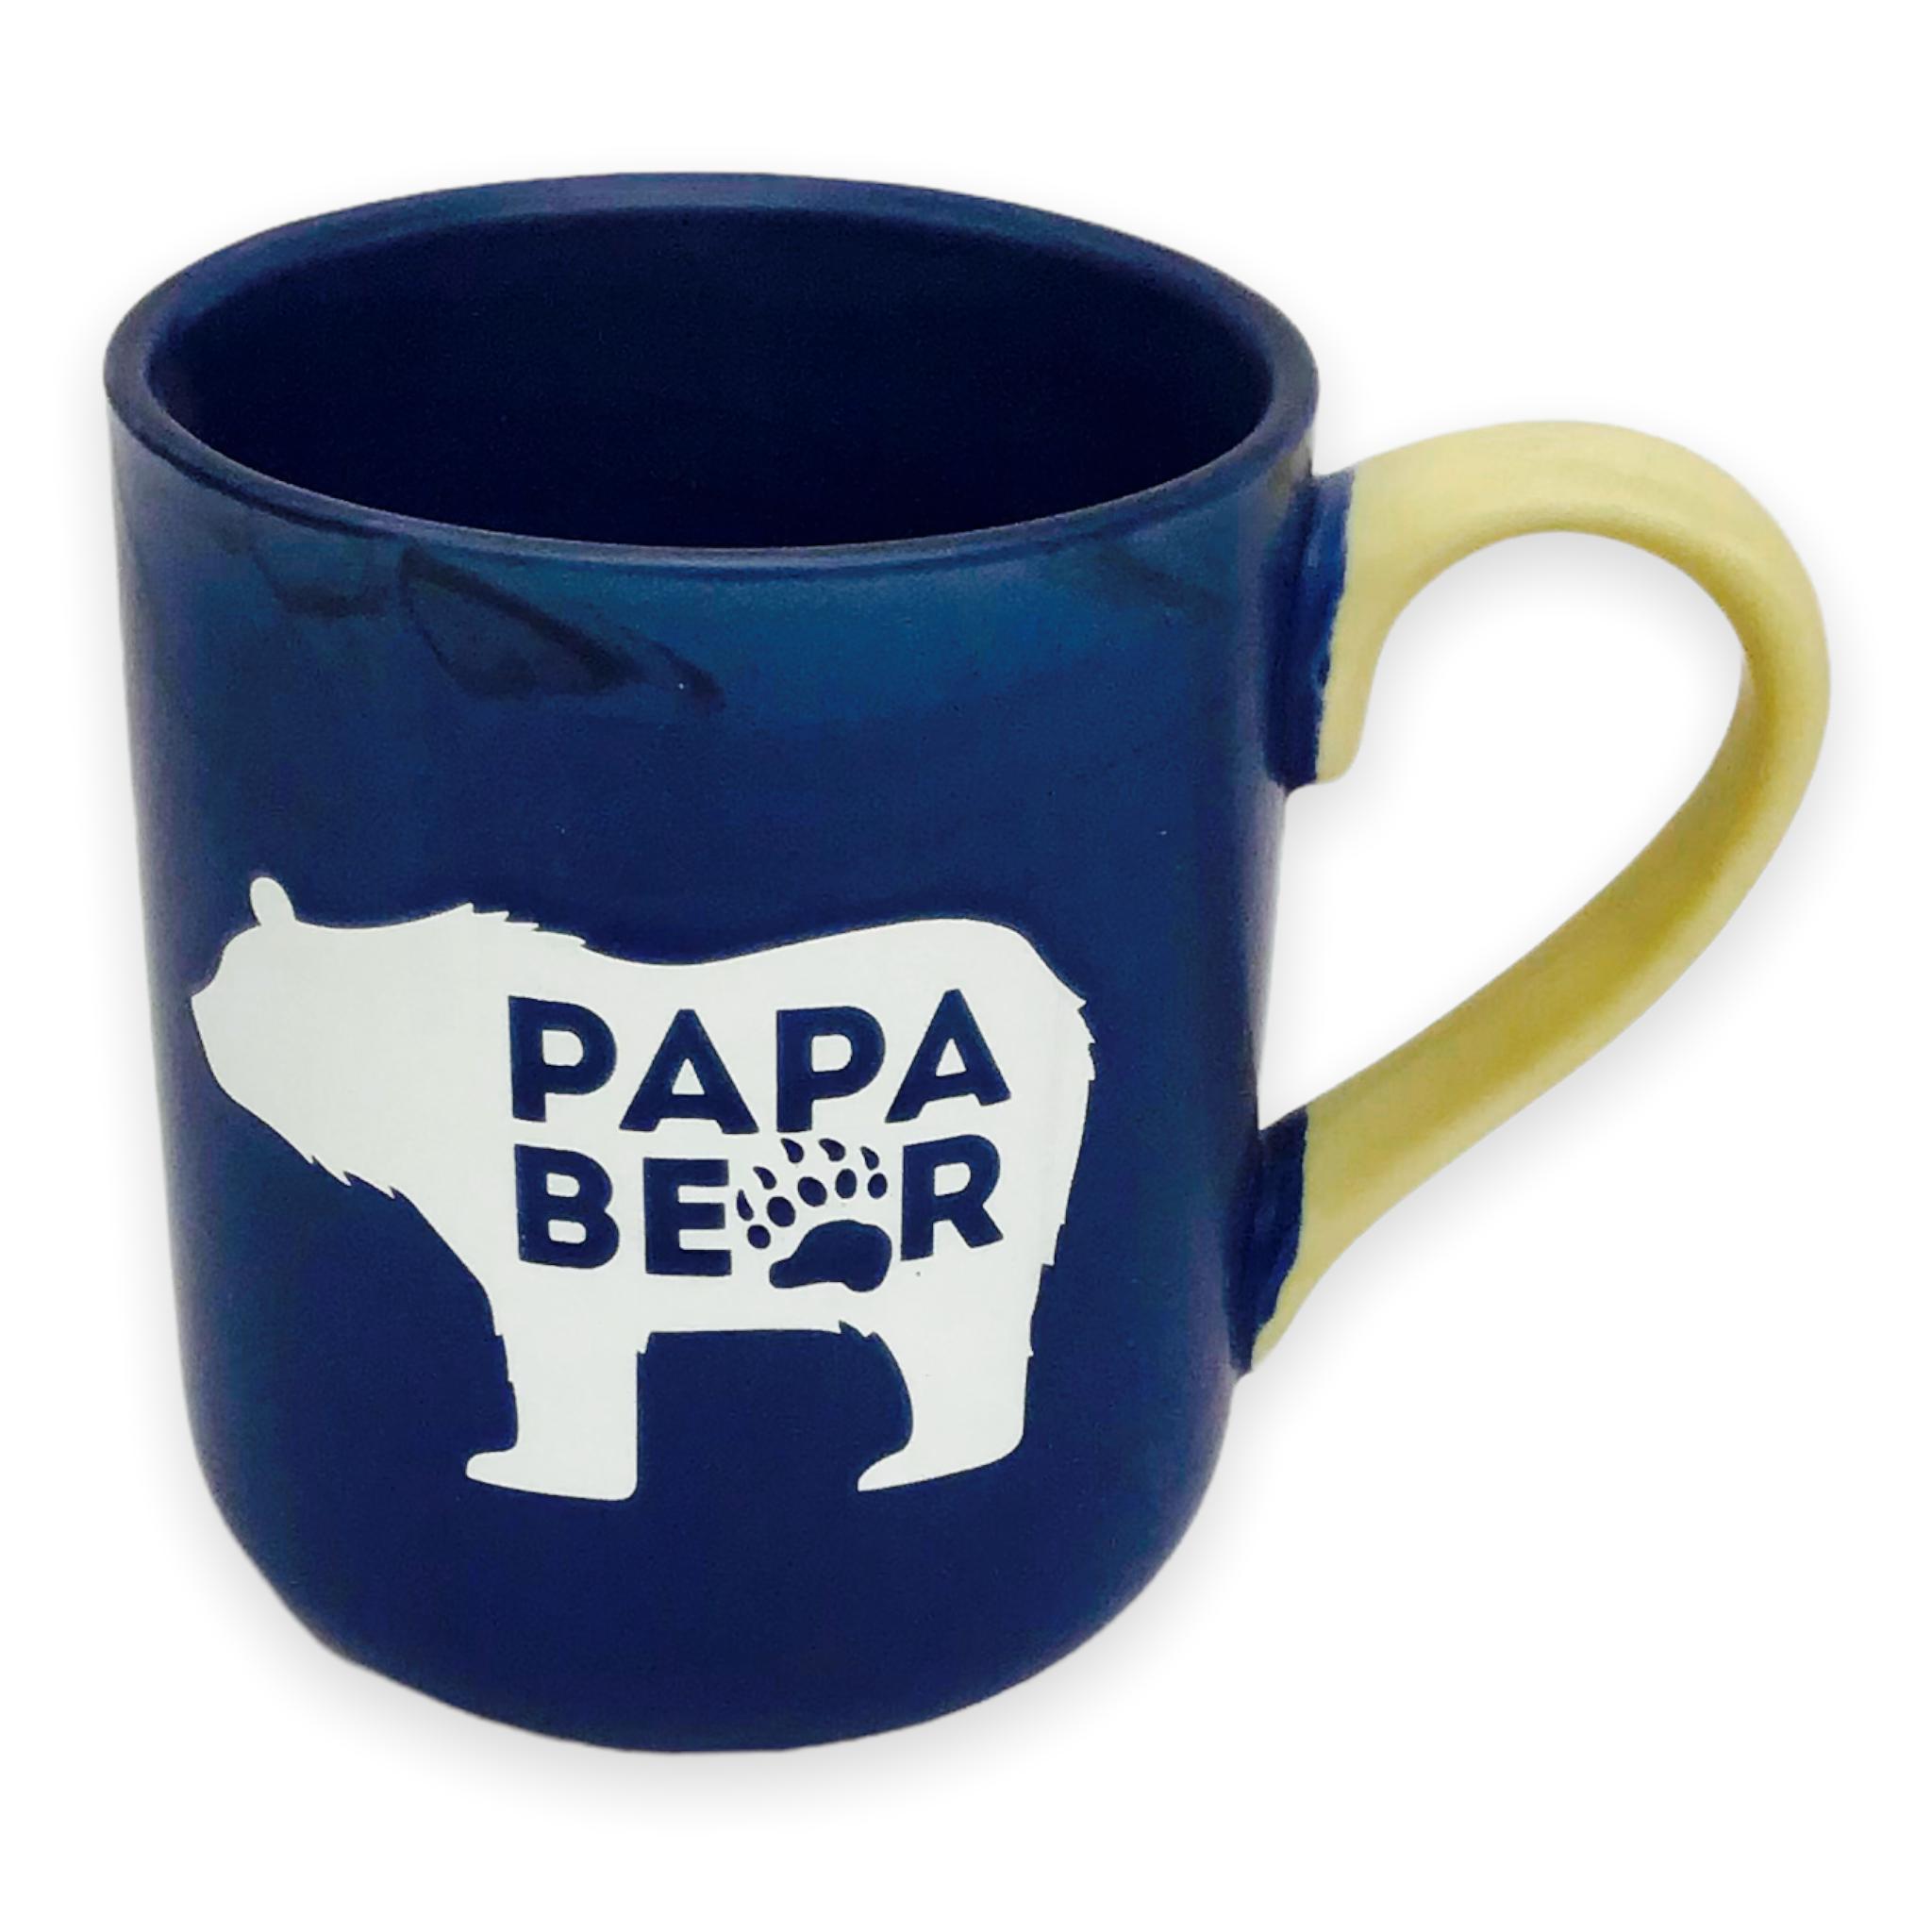 Papa Bear Coffee Mug, 18oz – Ceramic Coffee Mug with Papa Bear Needs a Coffee Quote – This Mug for Dad Makes a Great Gift – Features Cute Bear Shape